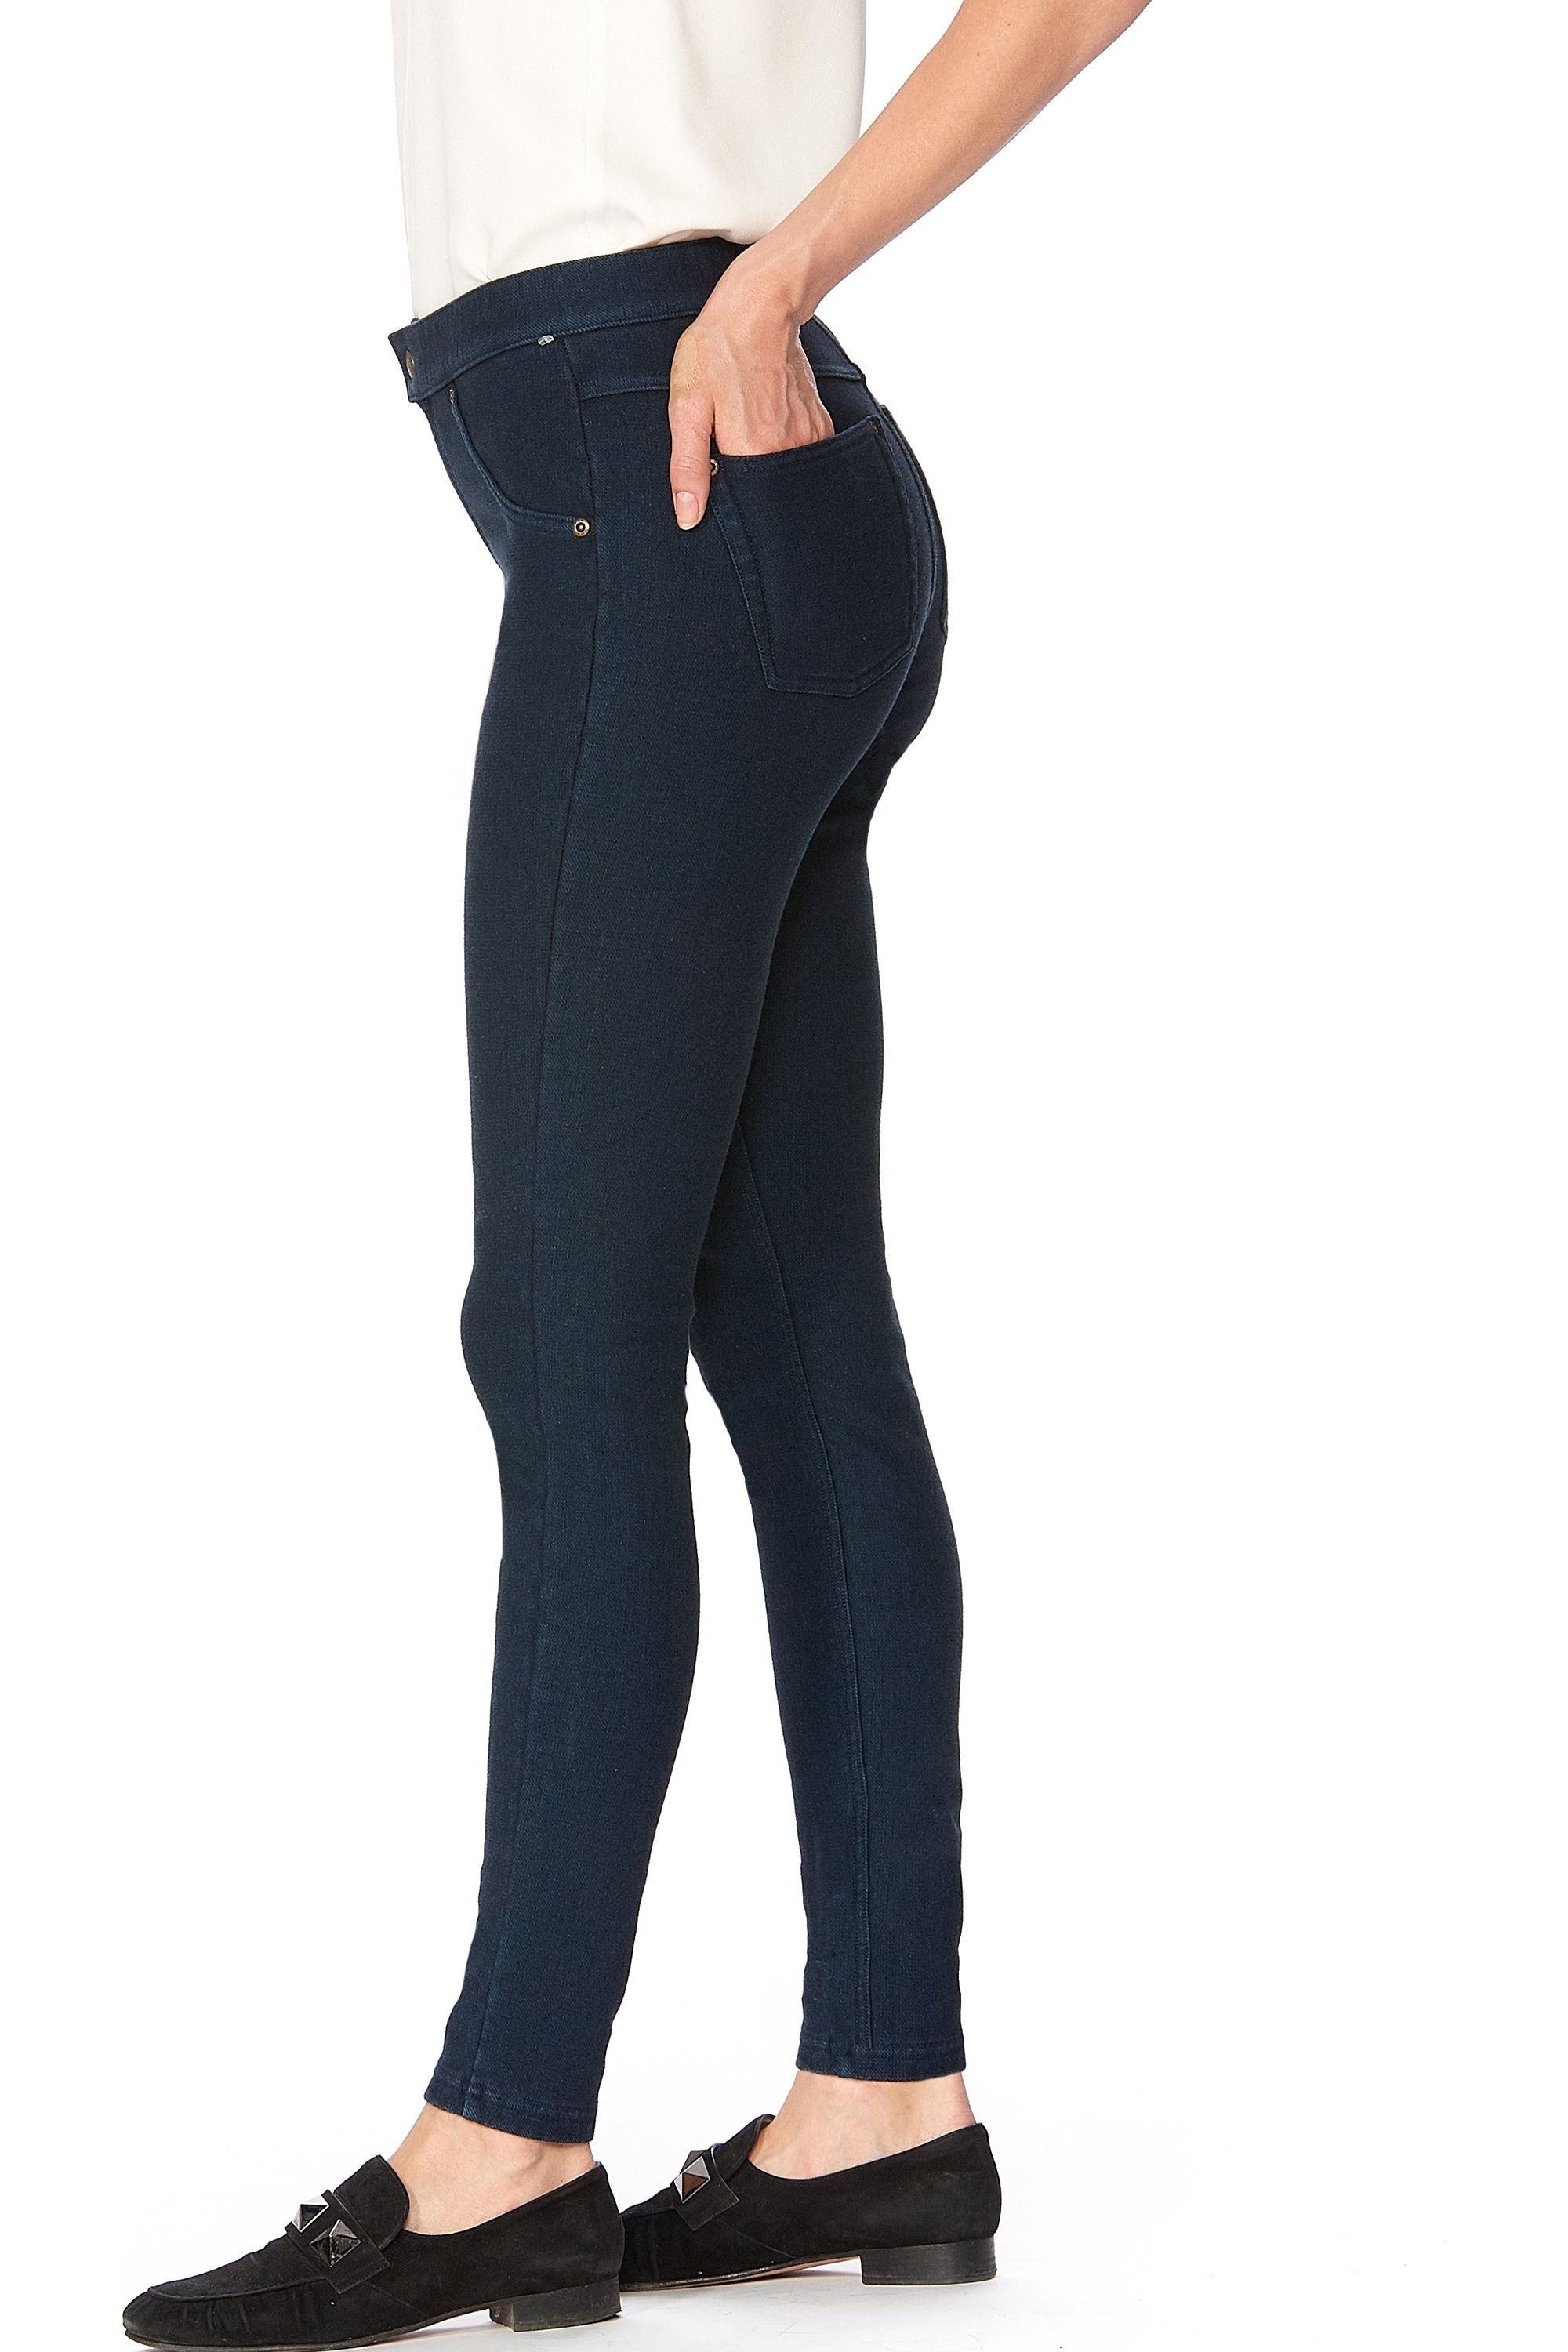 Women Fleece Lined Denim Jeans Thermal Spring Leggings Pants